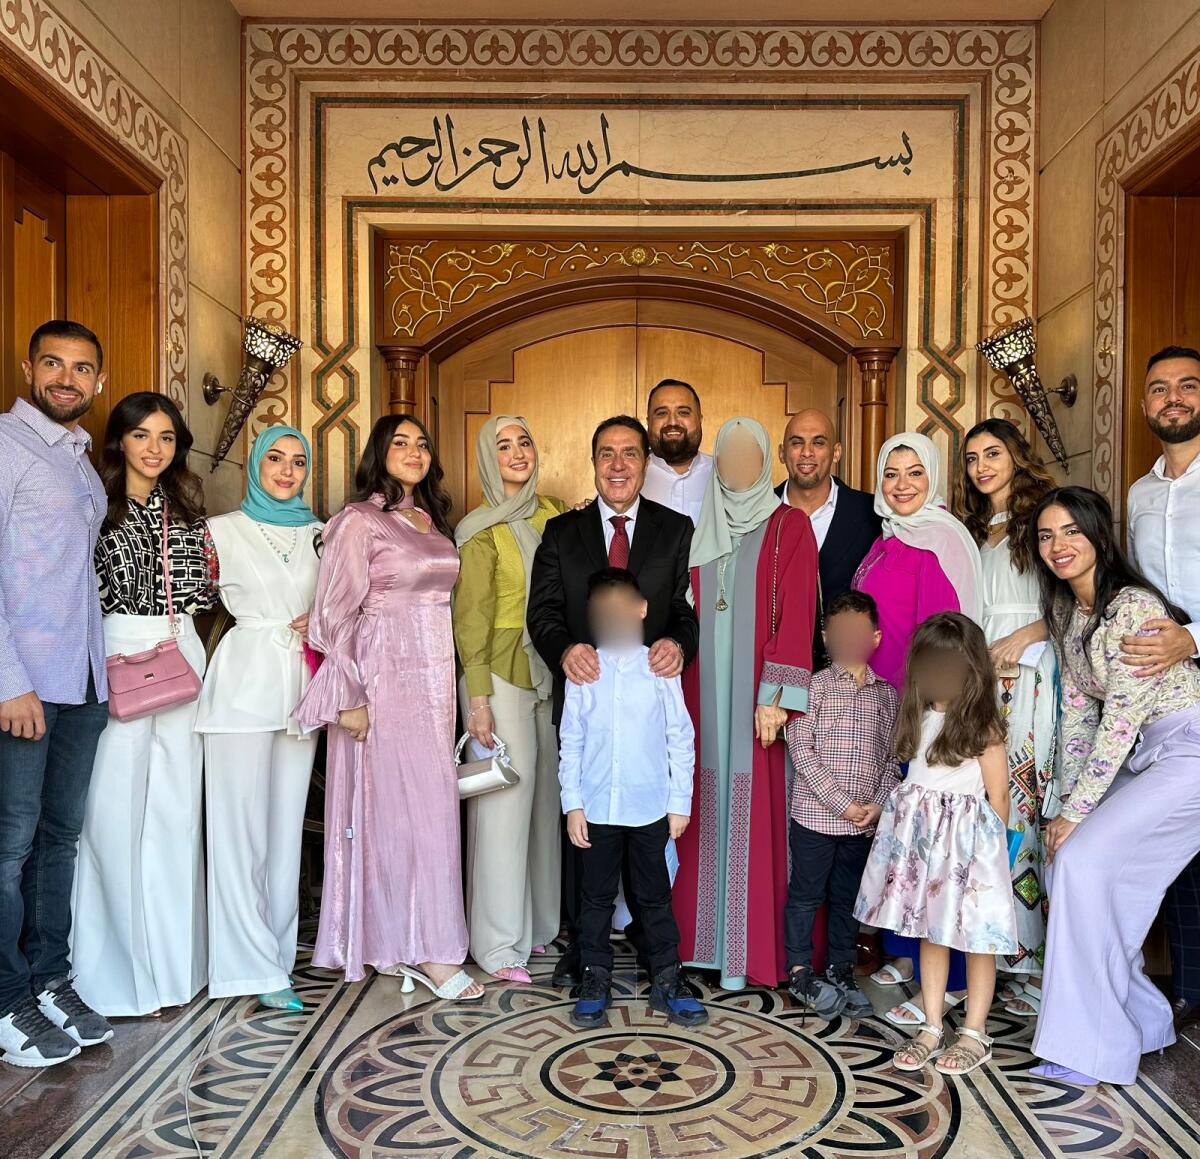 A photo of the Afana family last Eid Al Fitr. — Supplied